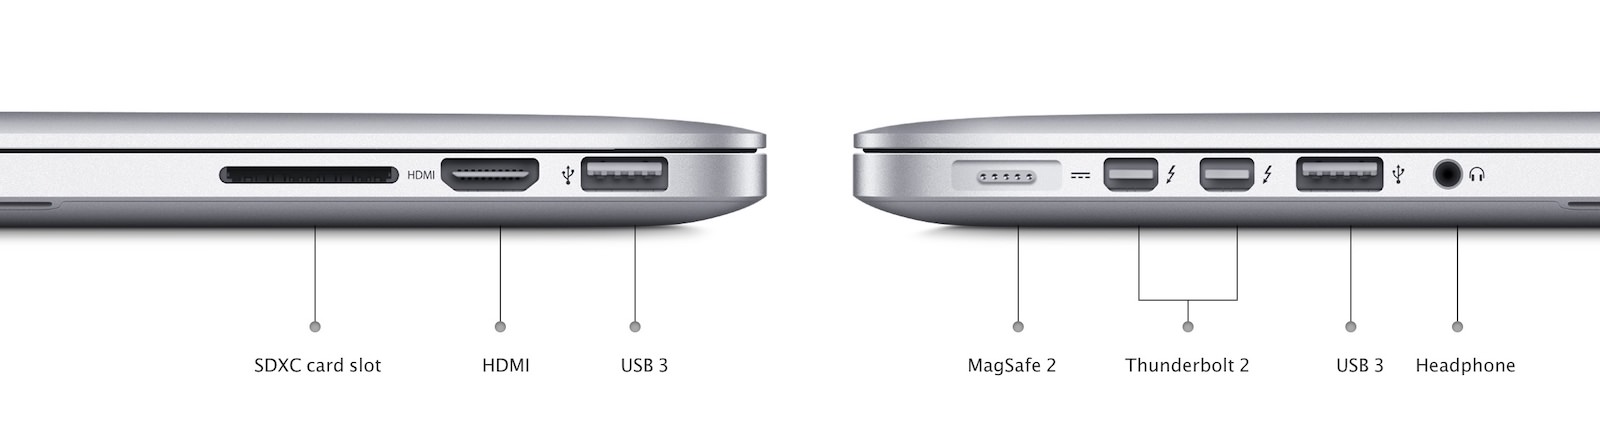 macbook-pro-2015-ports.jpg